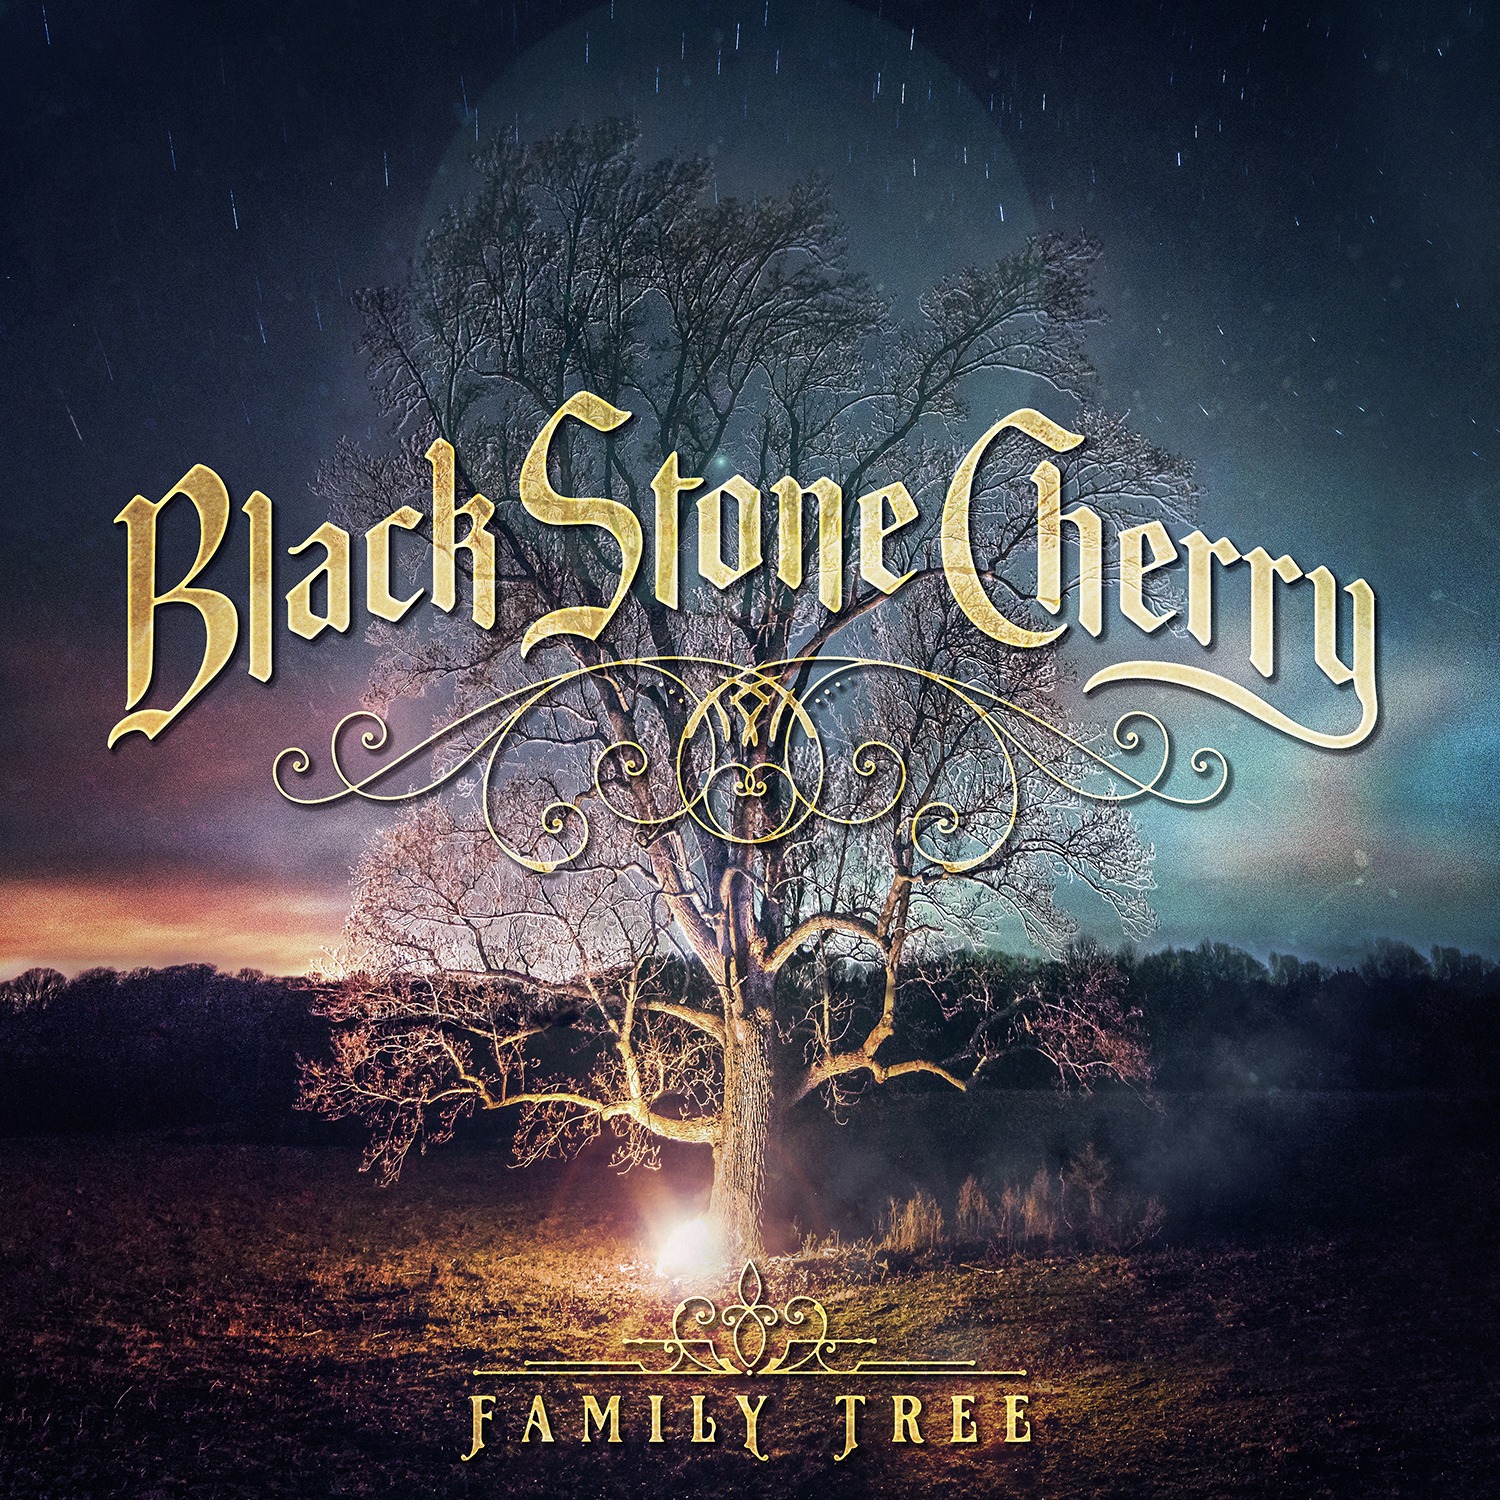 Black Stone Cherry To Release Sixth Studio Album FAMILY TREE on April 20